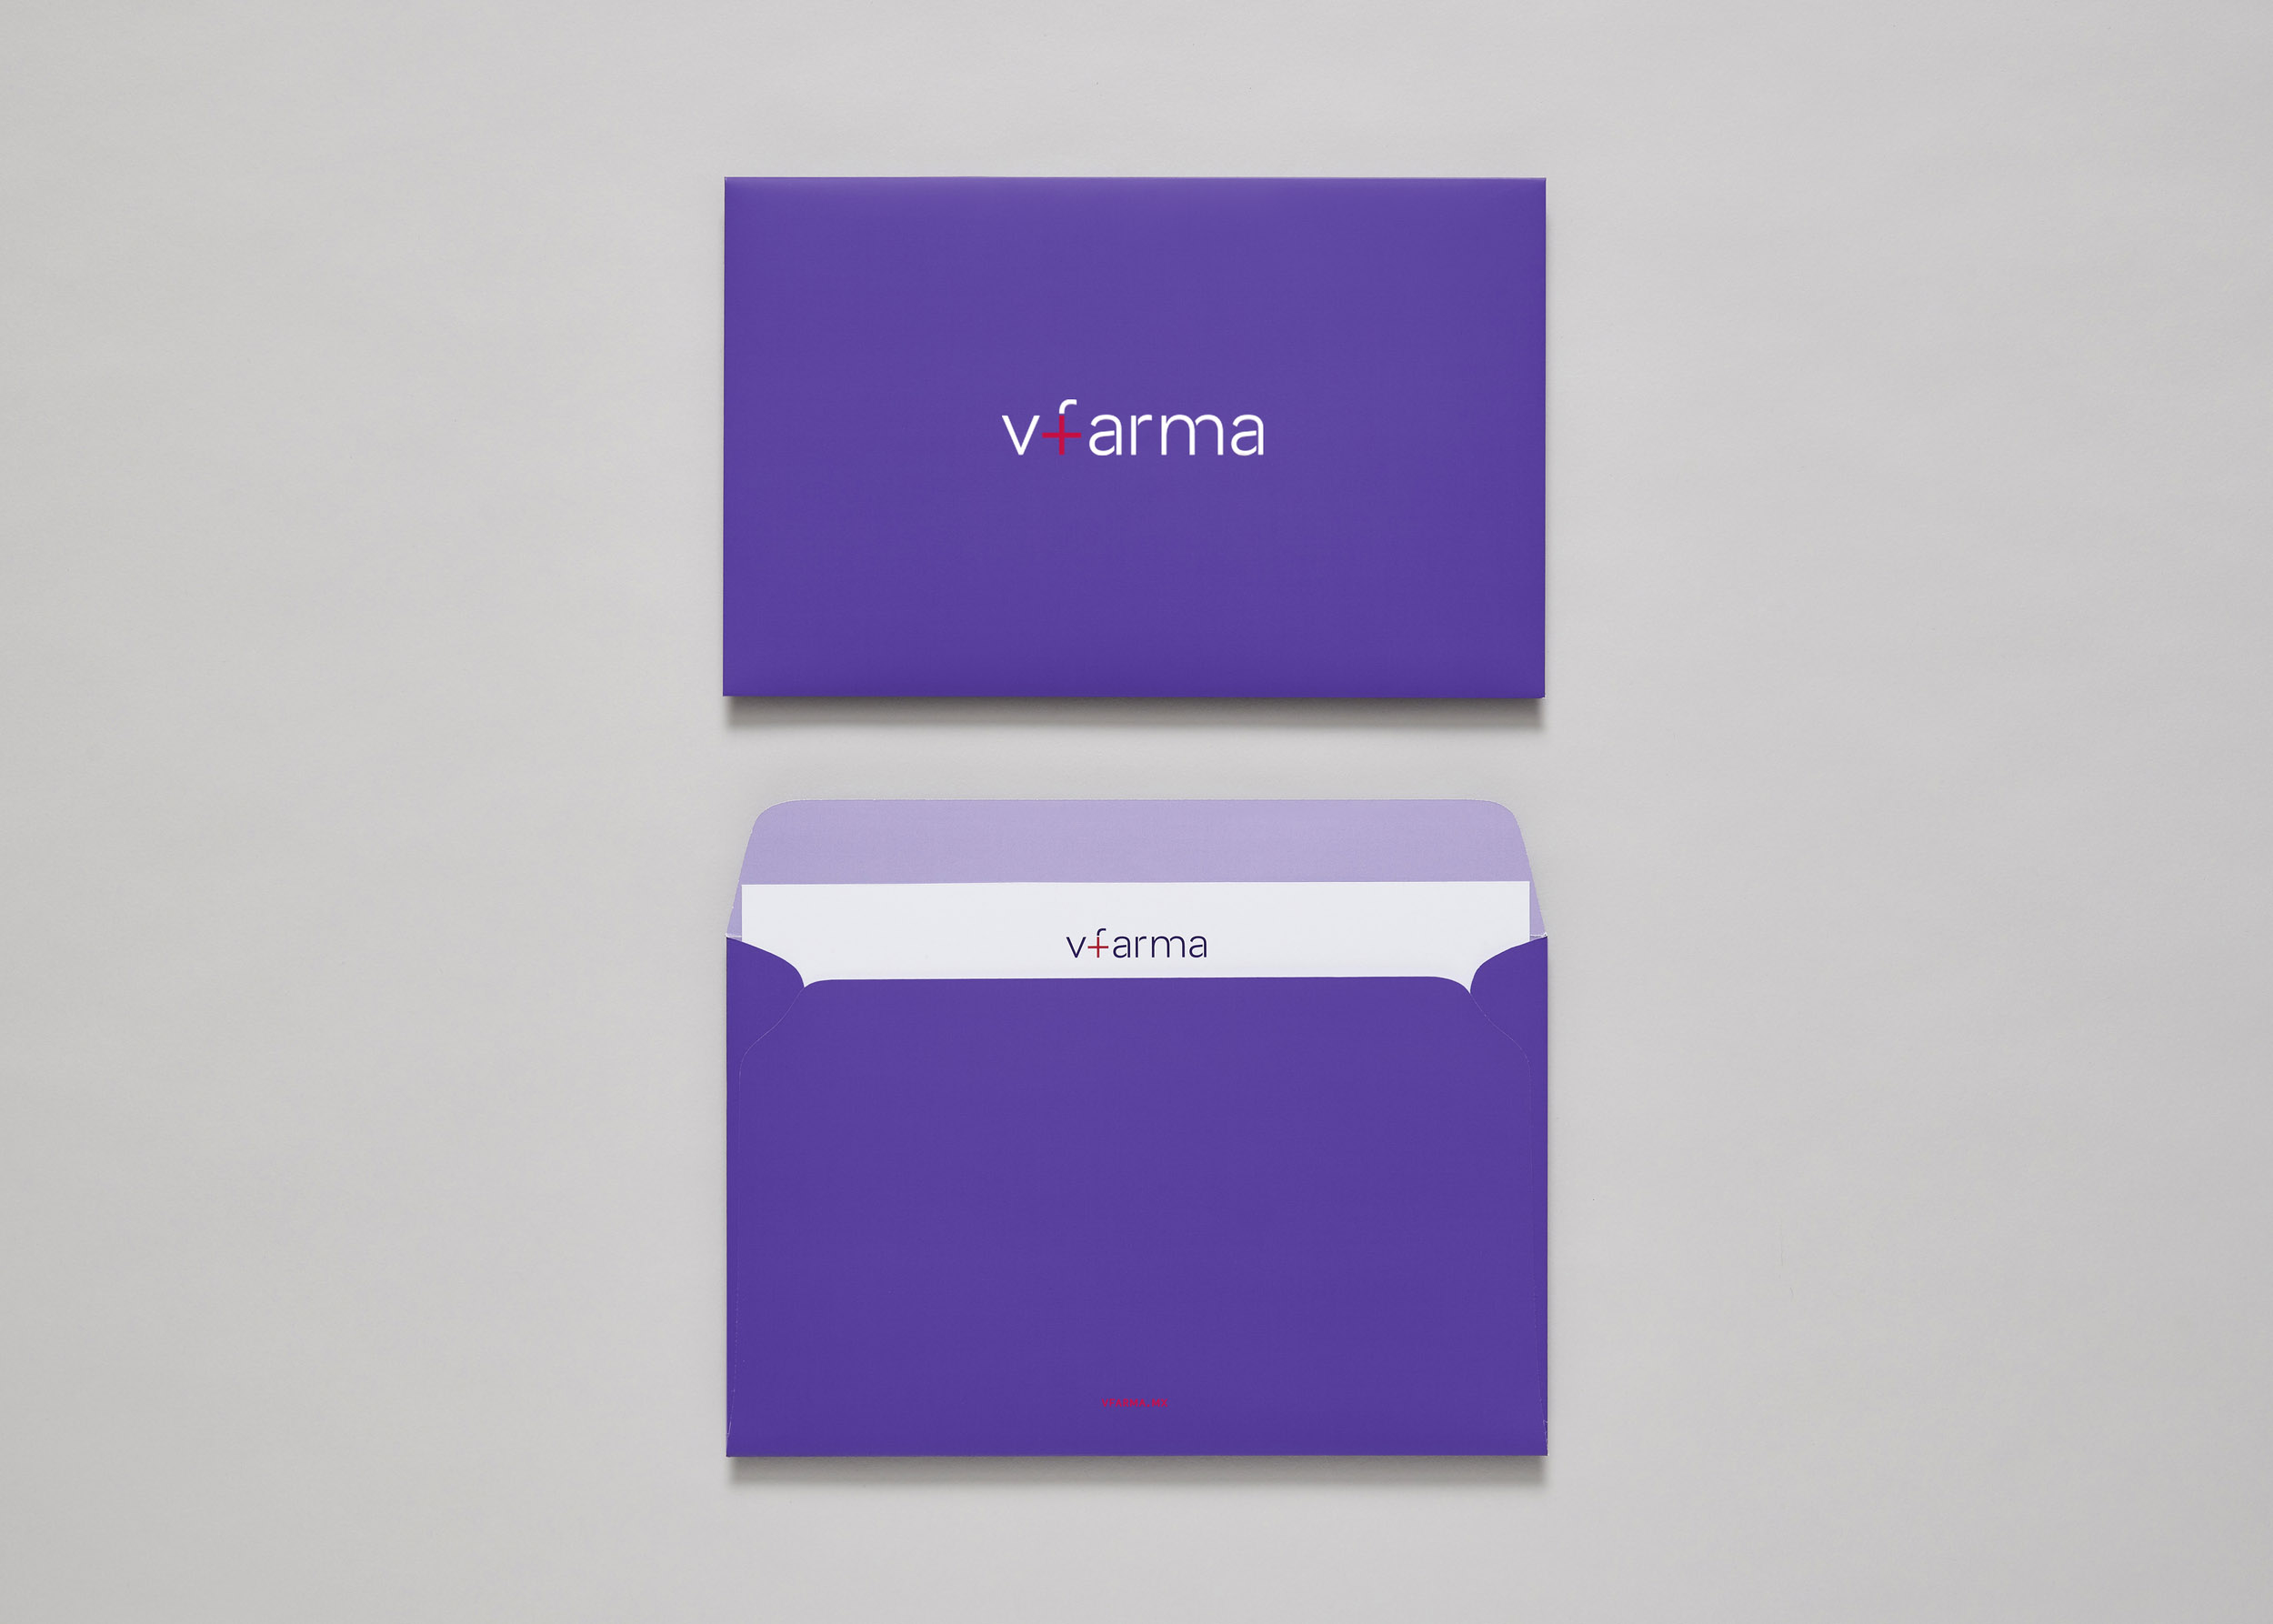 Vfarma药房品牌形象设计